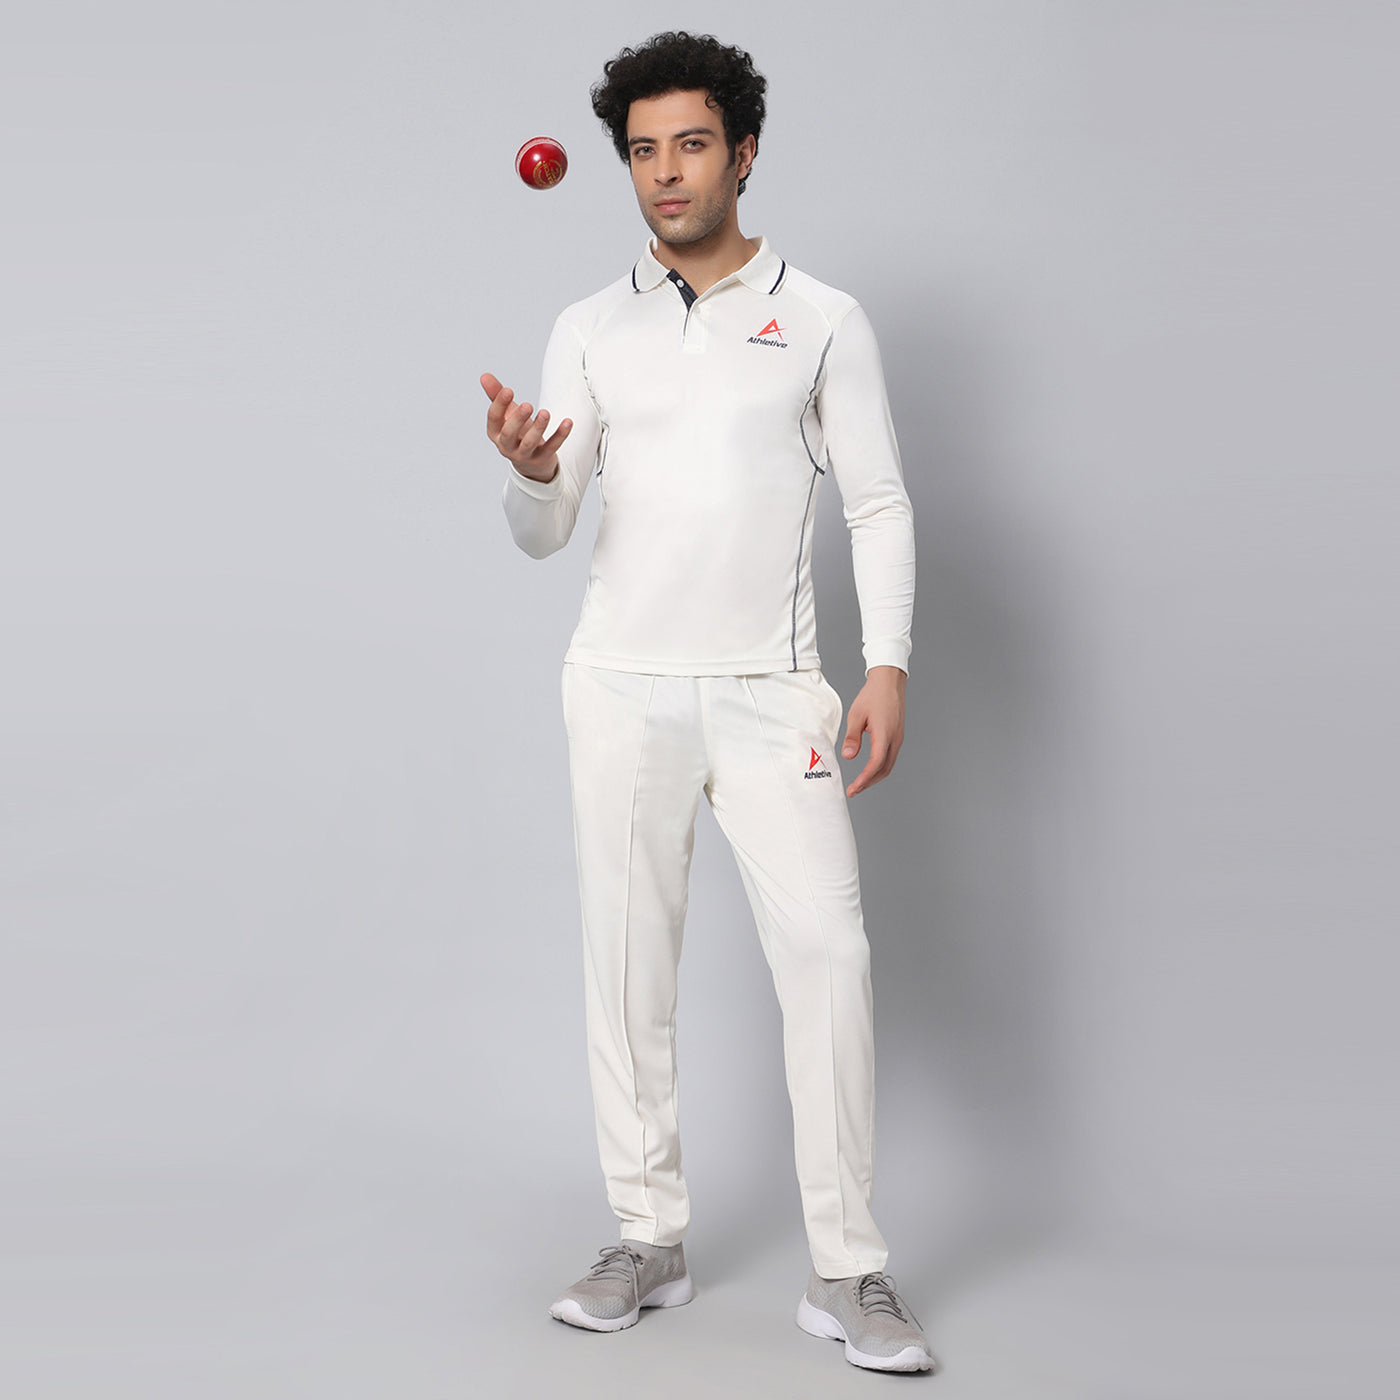 Athletive Air-Mesh Cricket Whites Full Sleevs T-shirt